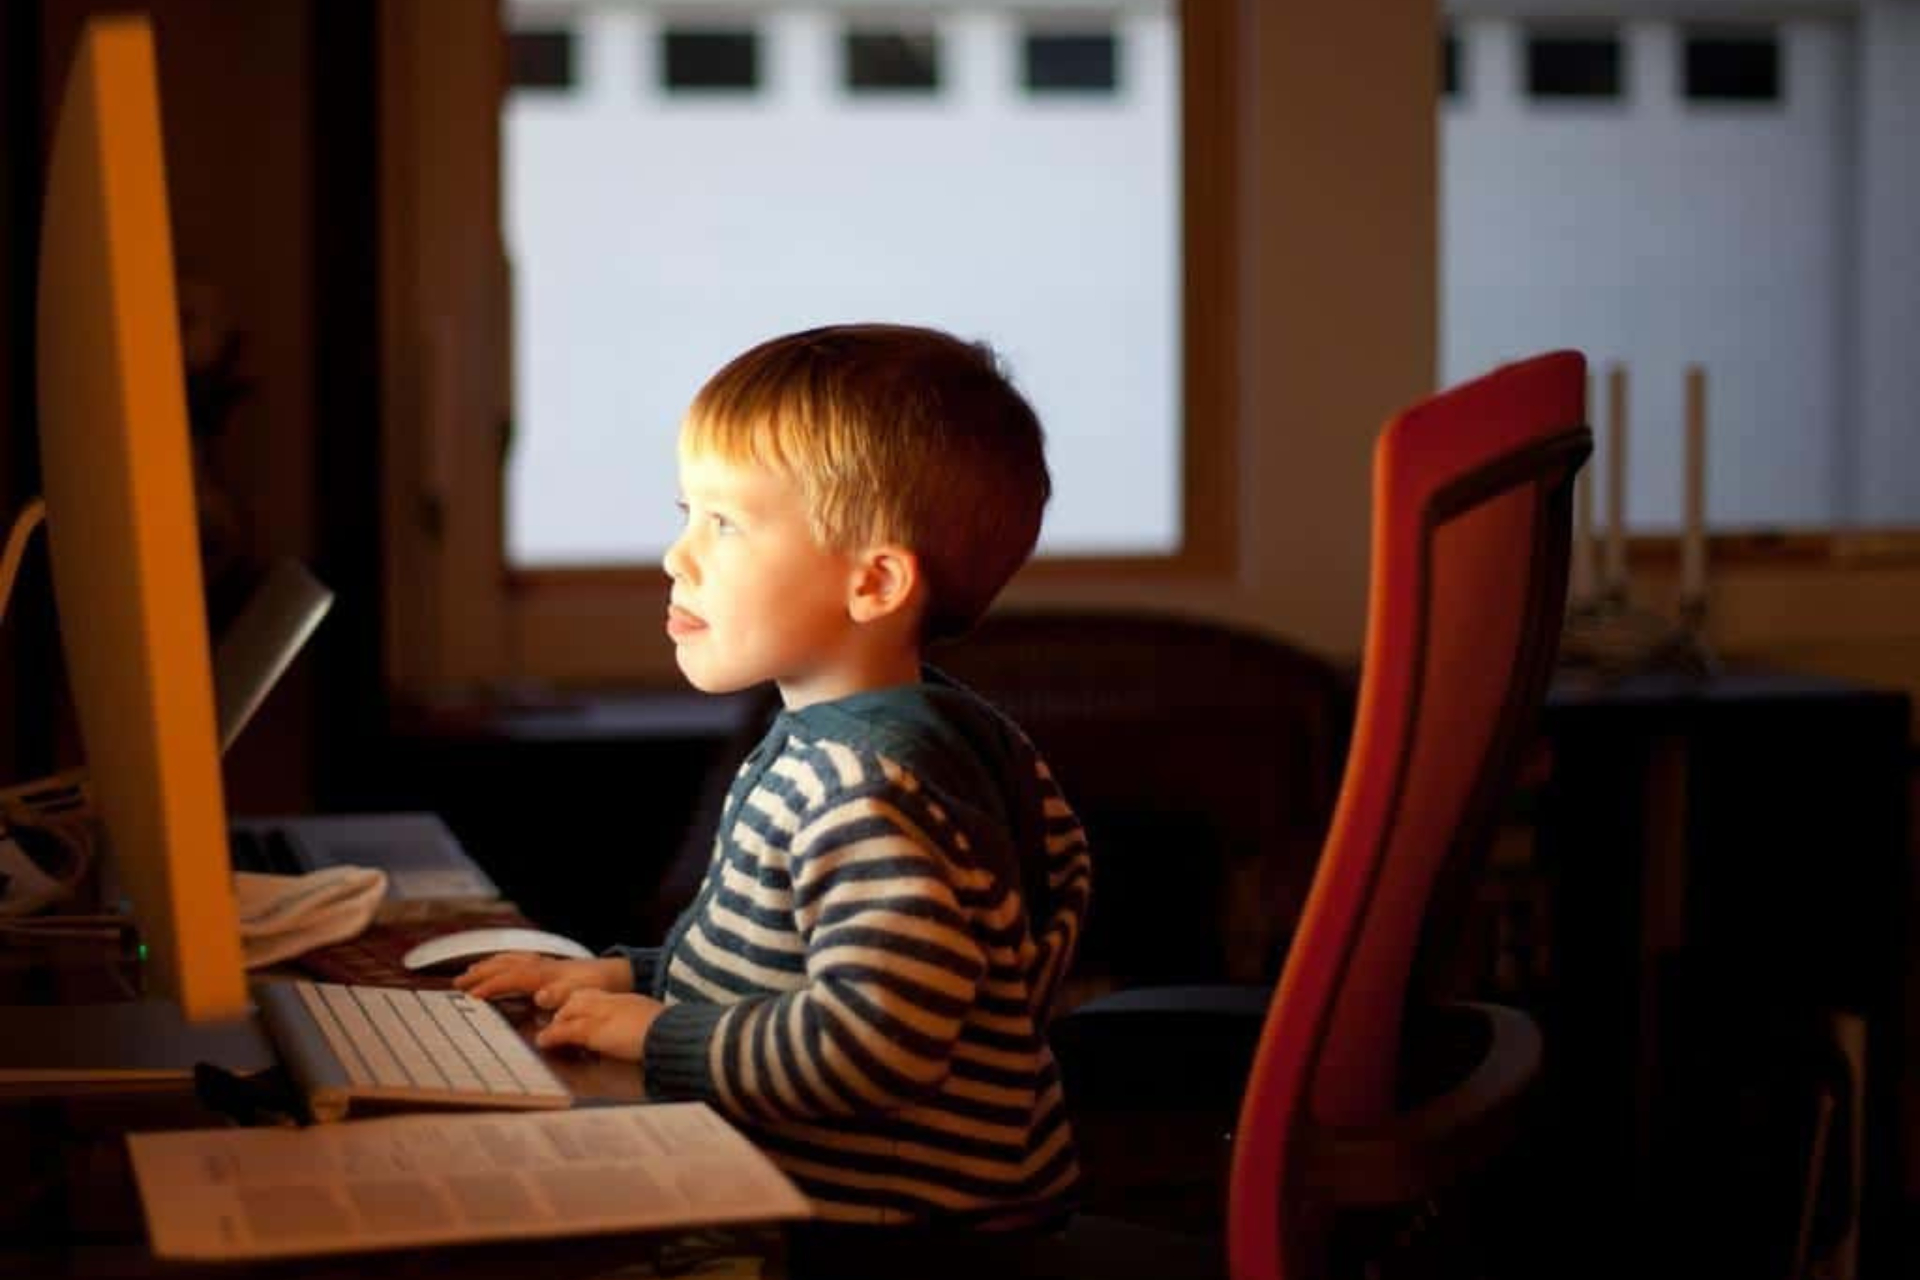 Online children security